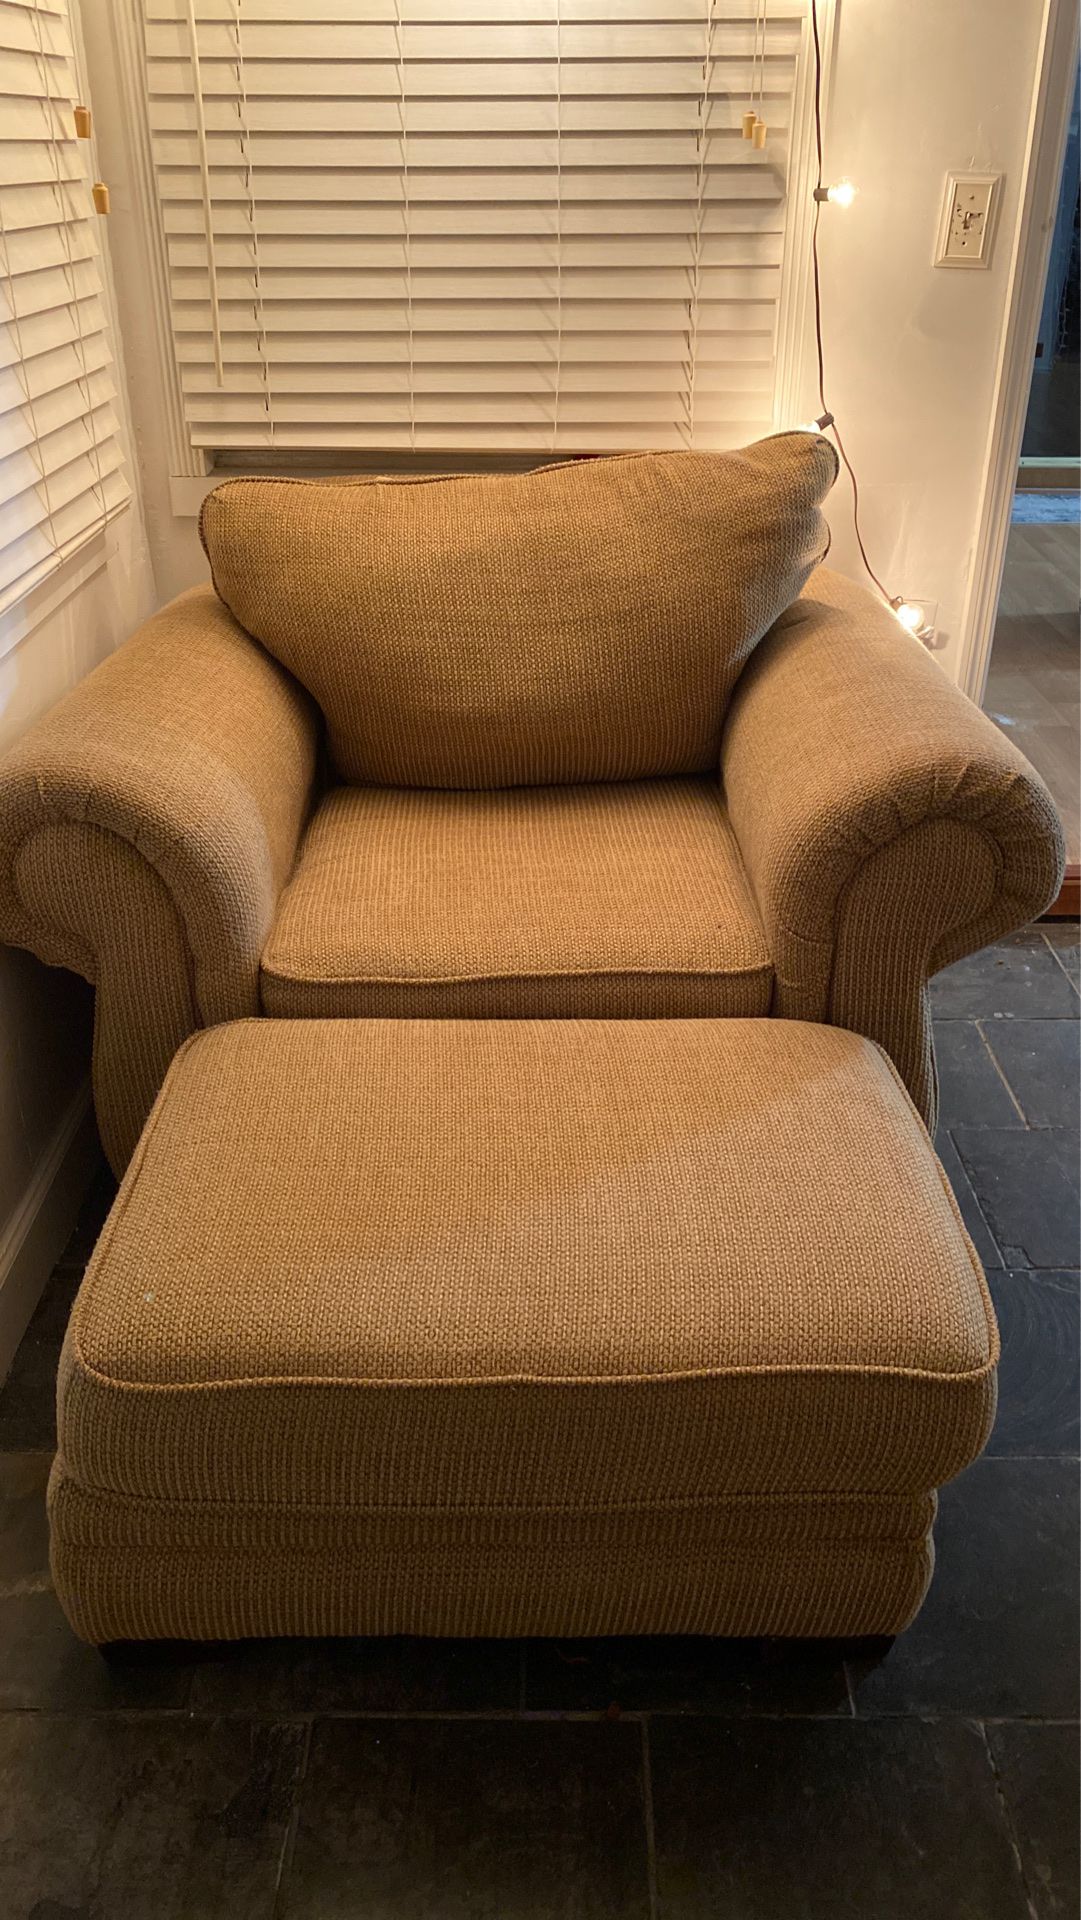 Sofa chair with ottoman